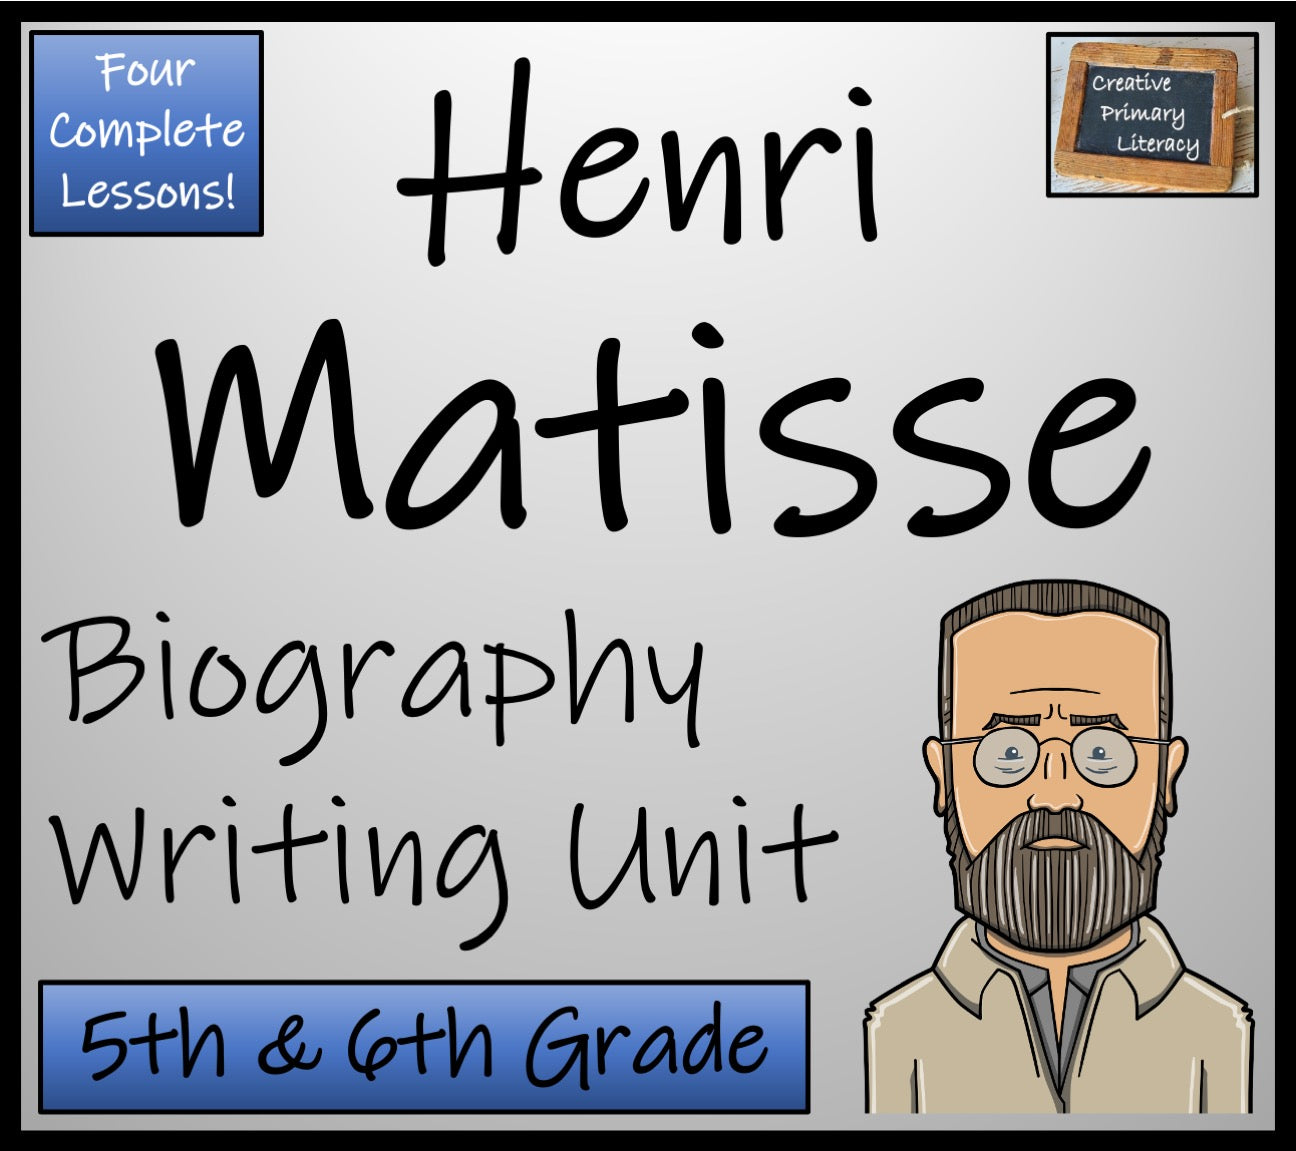 Henri Matisse Biography Writing Unit | 5th Grade & 6th Grade